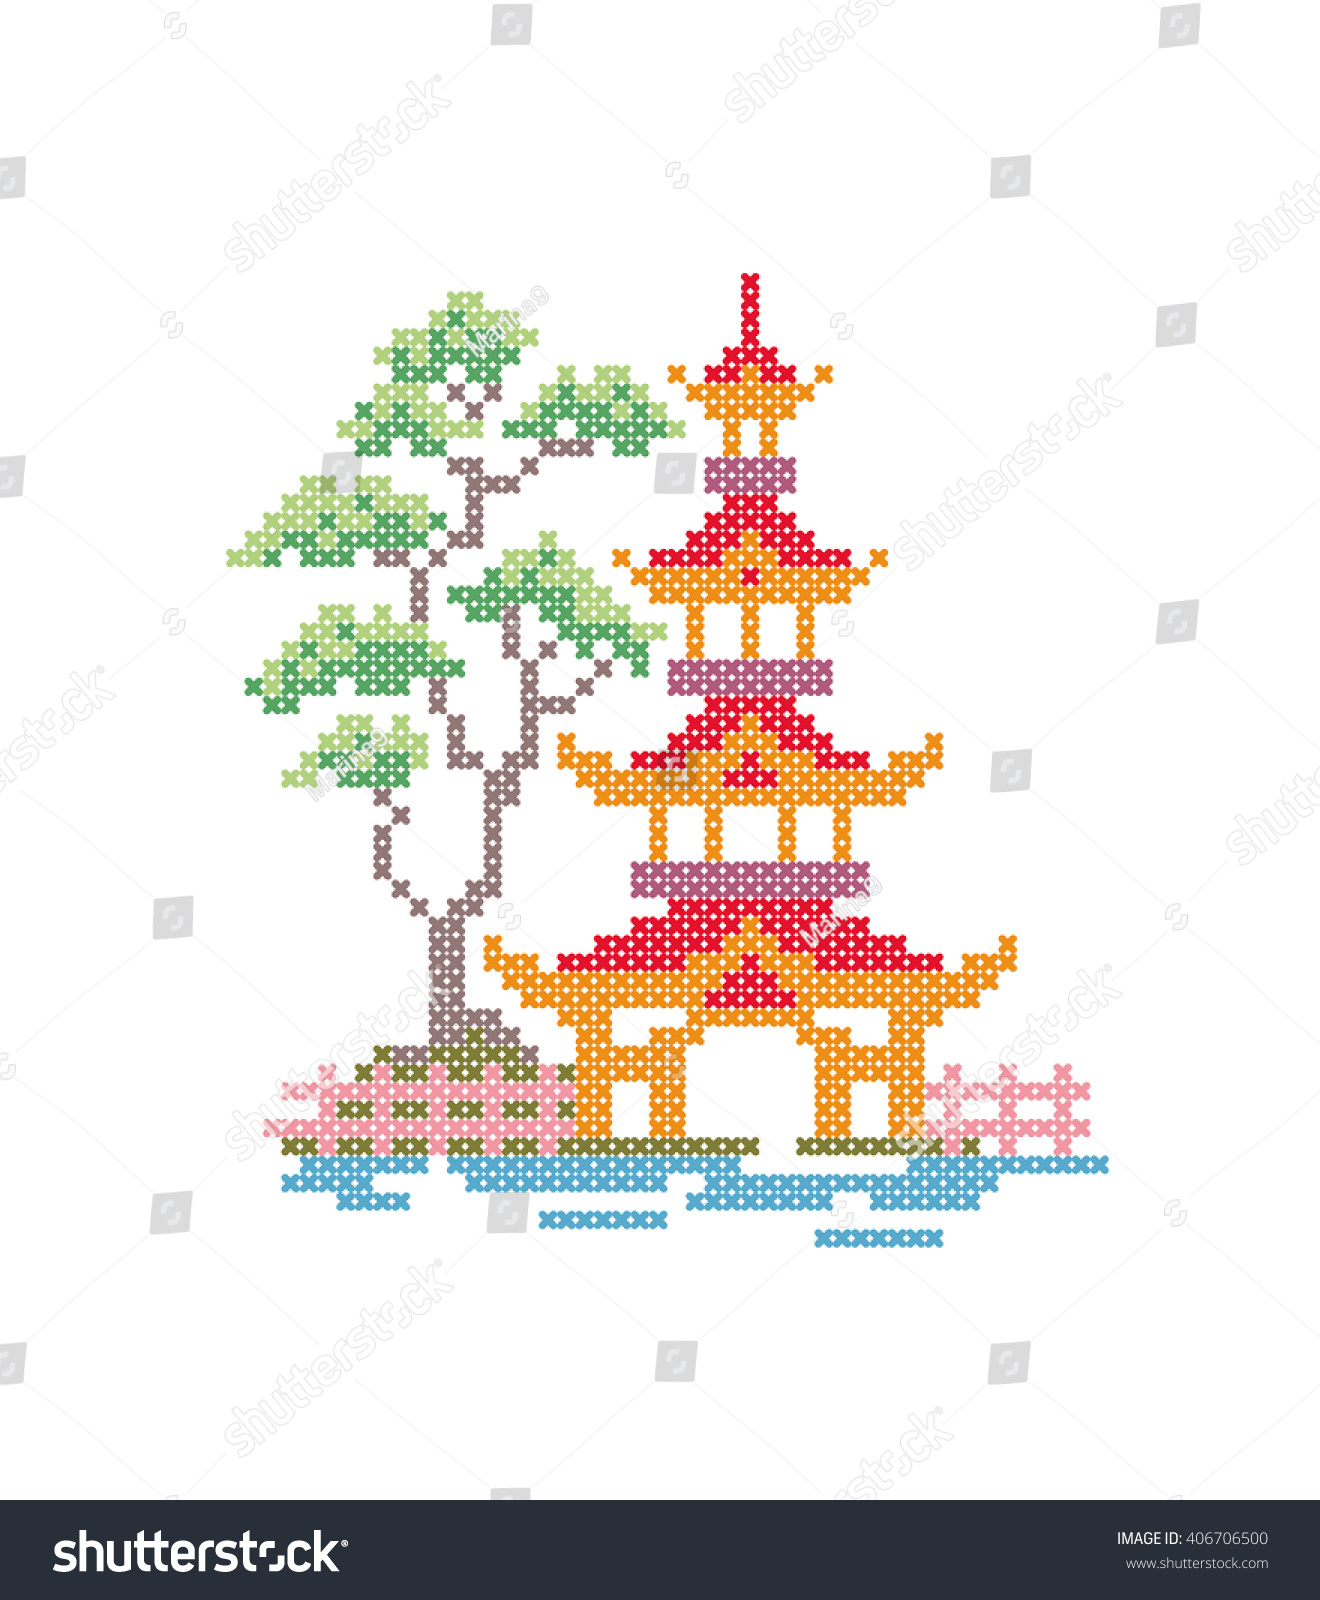 Beautiful Japan PDF Counted cross stitch pattern pagoda japanese Landscape Digital cross stitch chart Japanee fan instant downoad